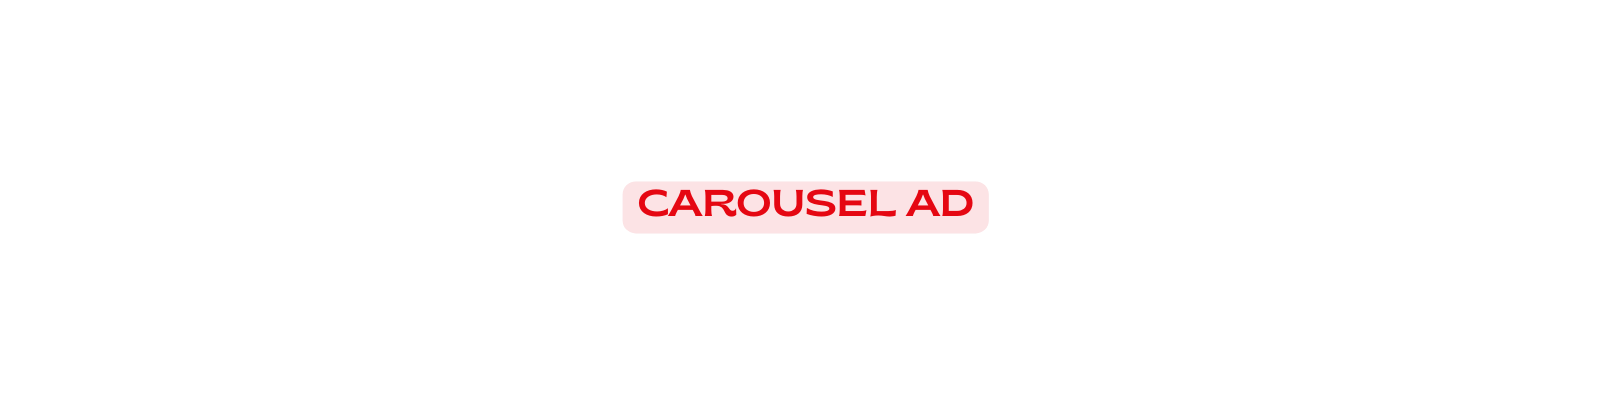 carousel ad